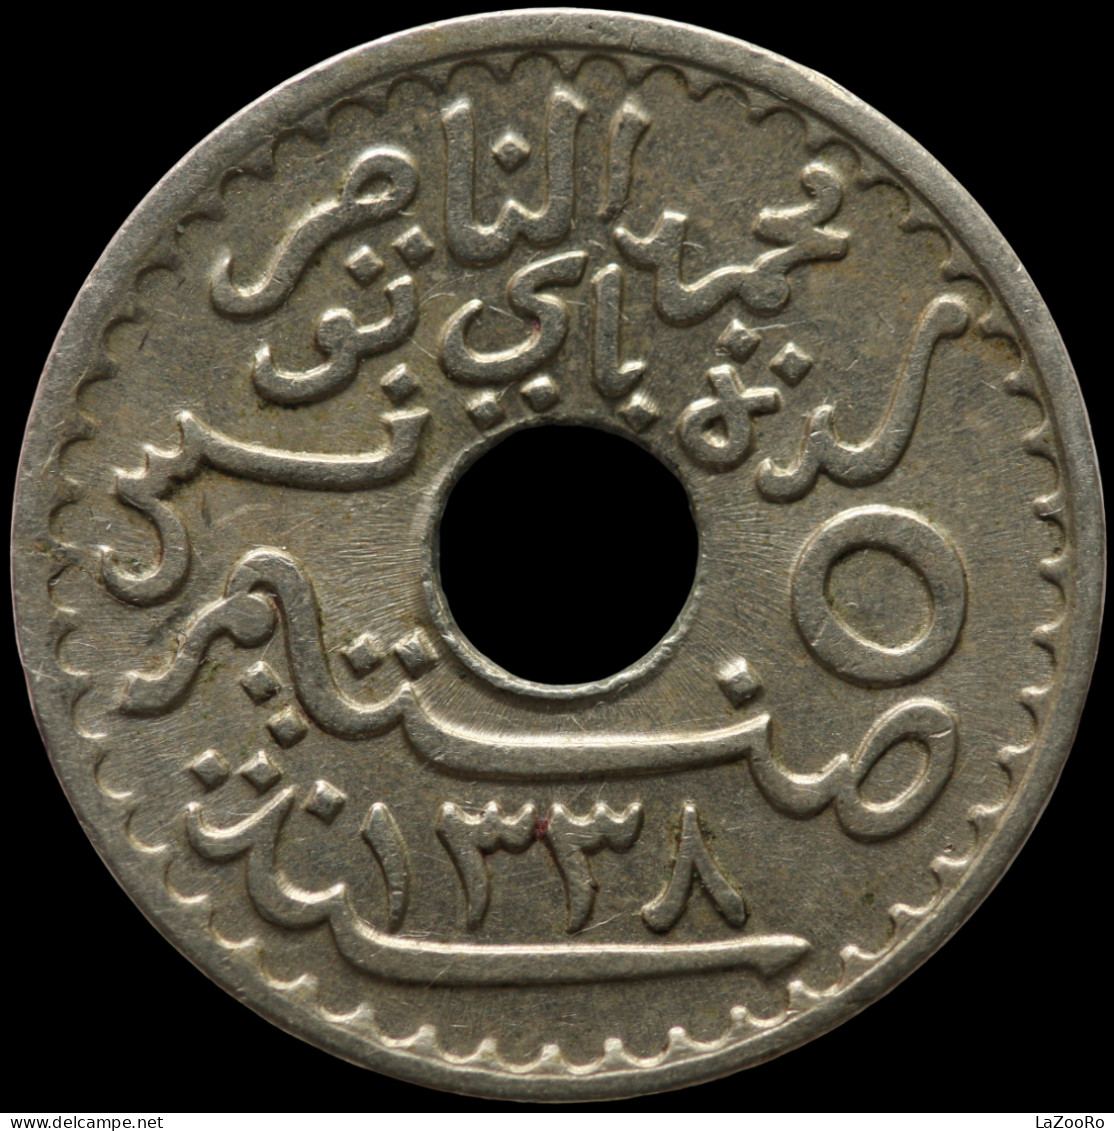 LaZooRo: Tunisia 5 Centimes 1920 UNC - Tunesien